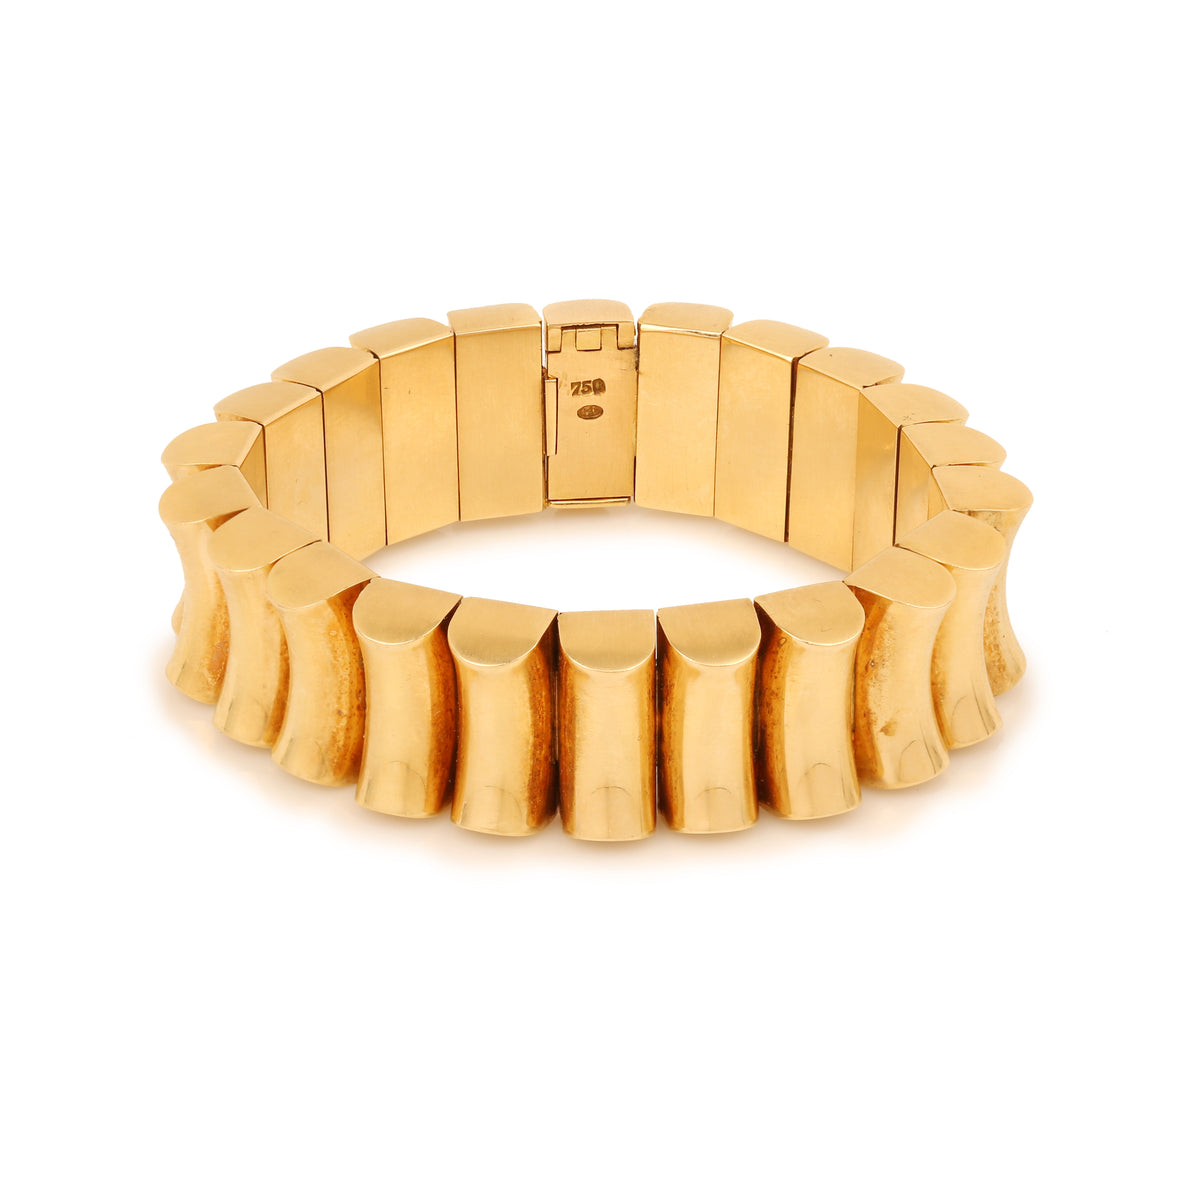 18 carat gold bracelet - jewelry - by owner - sale - craigslist